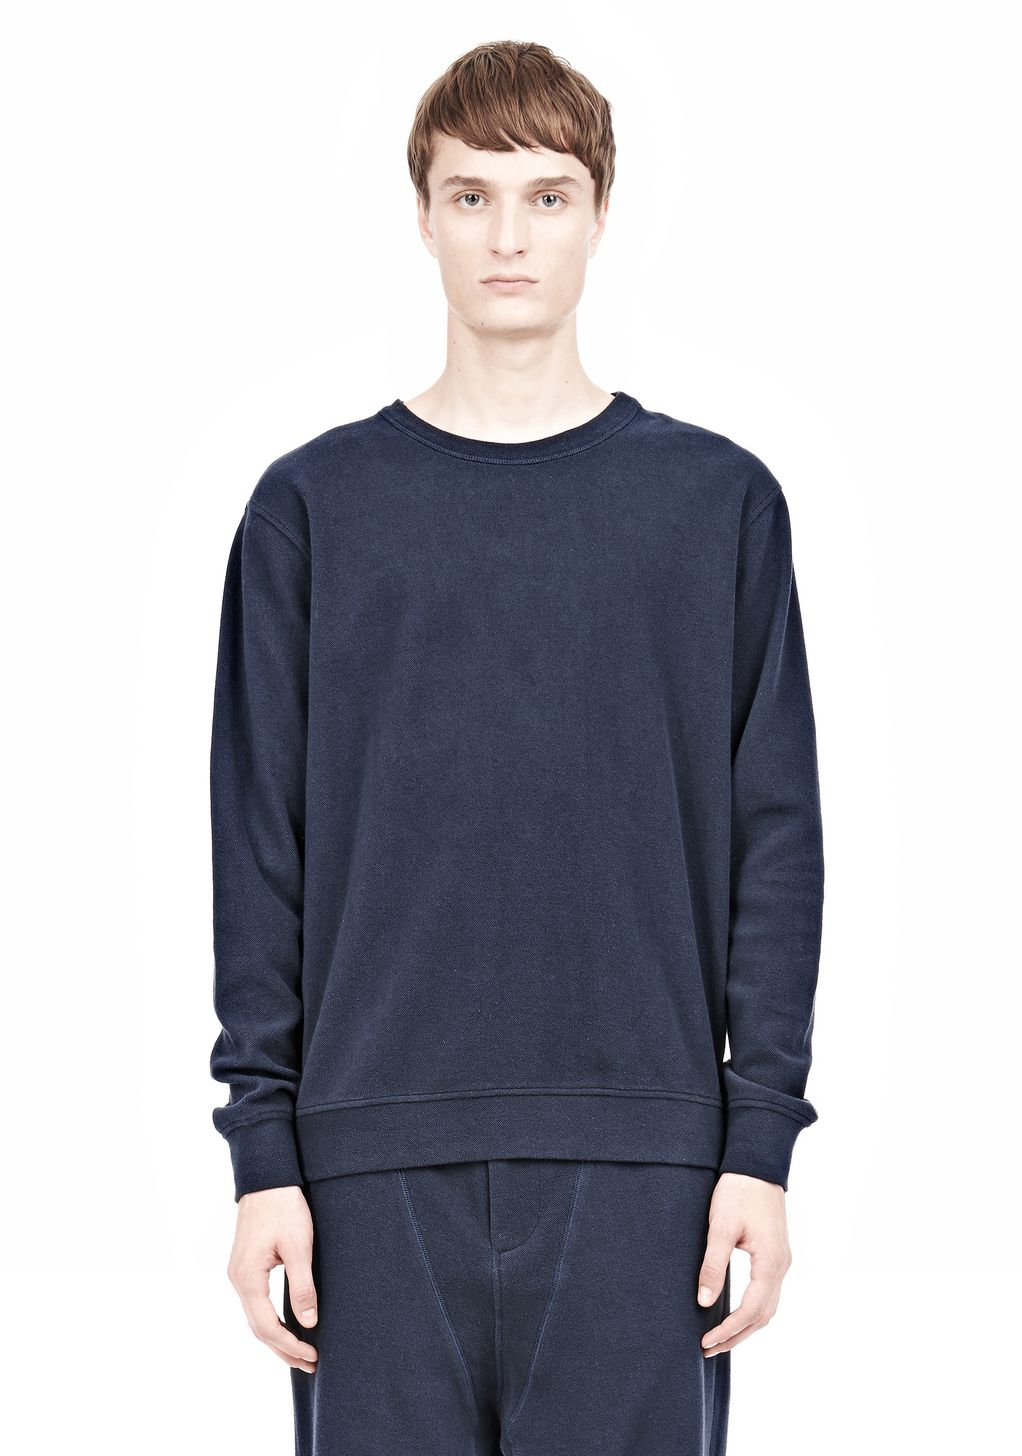 Alexander wang Pique Double Knit Sweatshirt in Blue for Men | Lyst